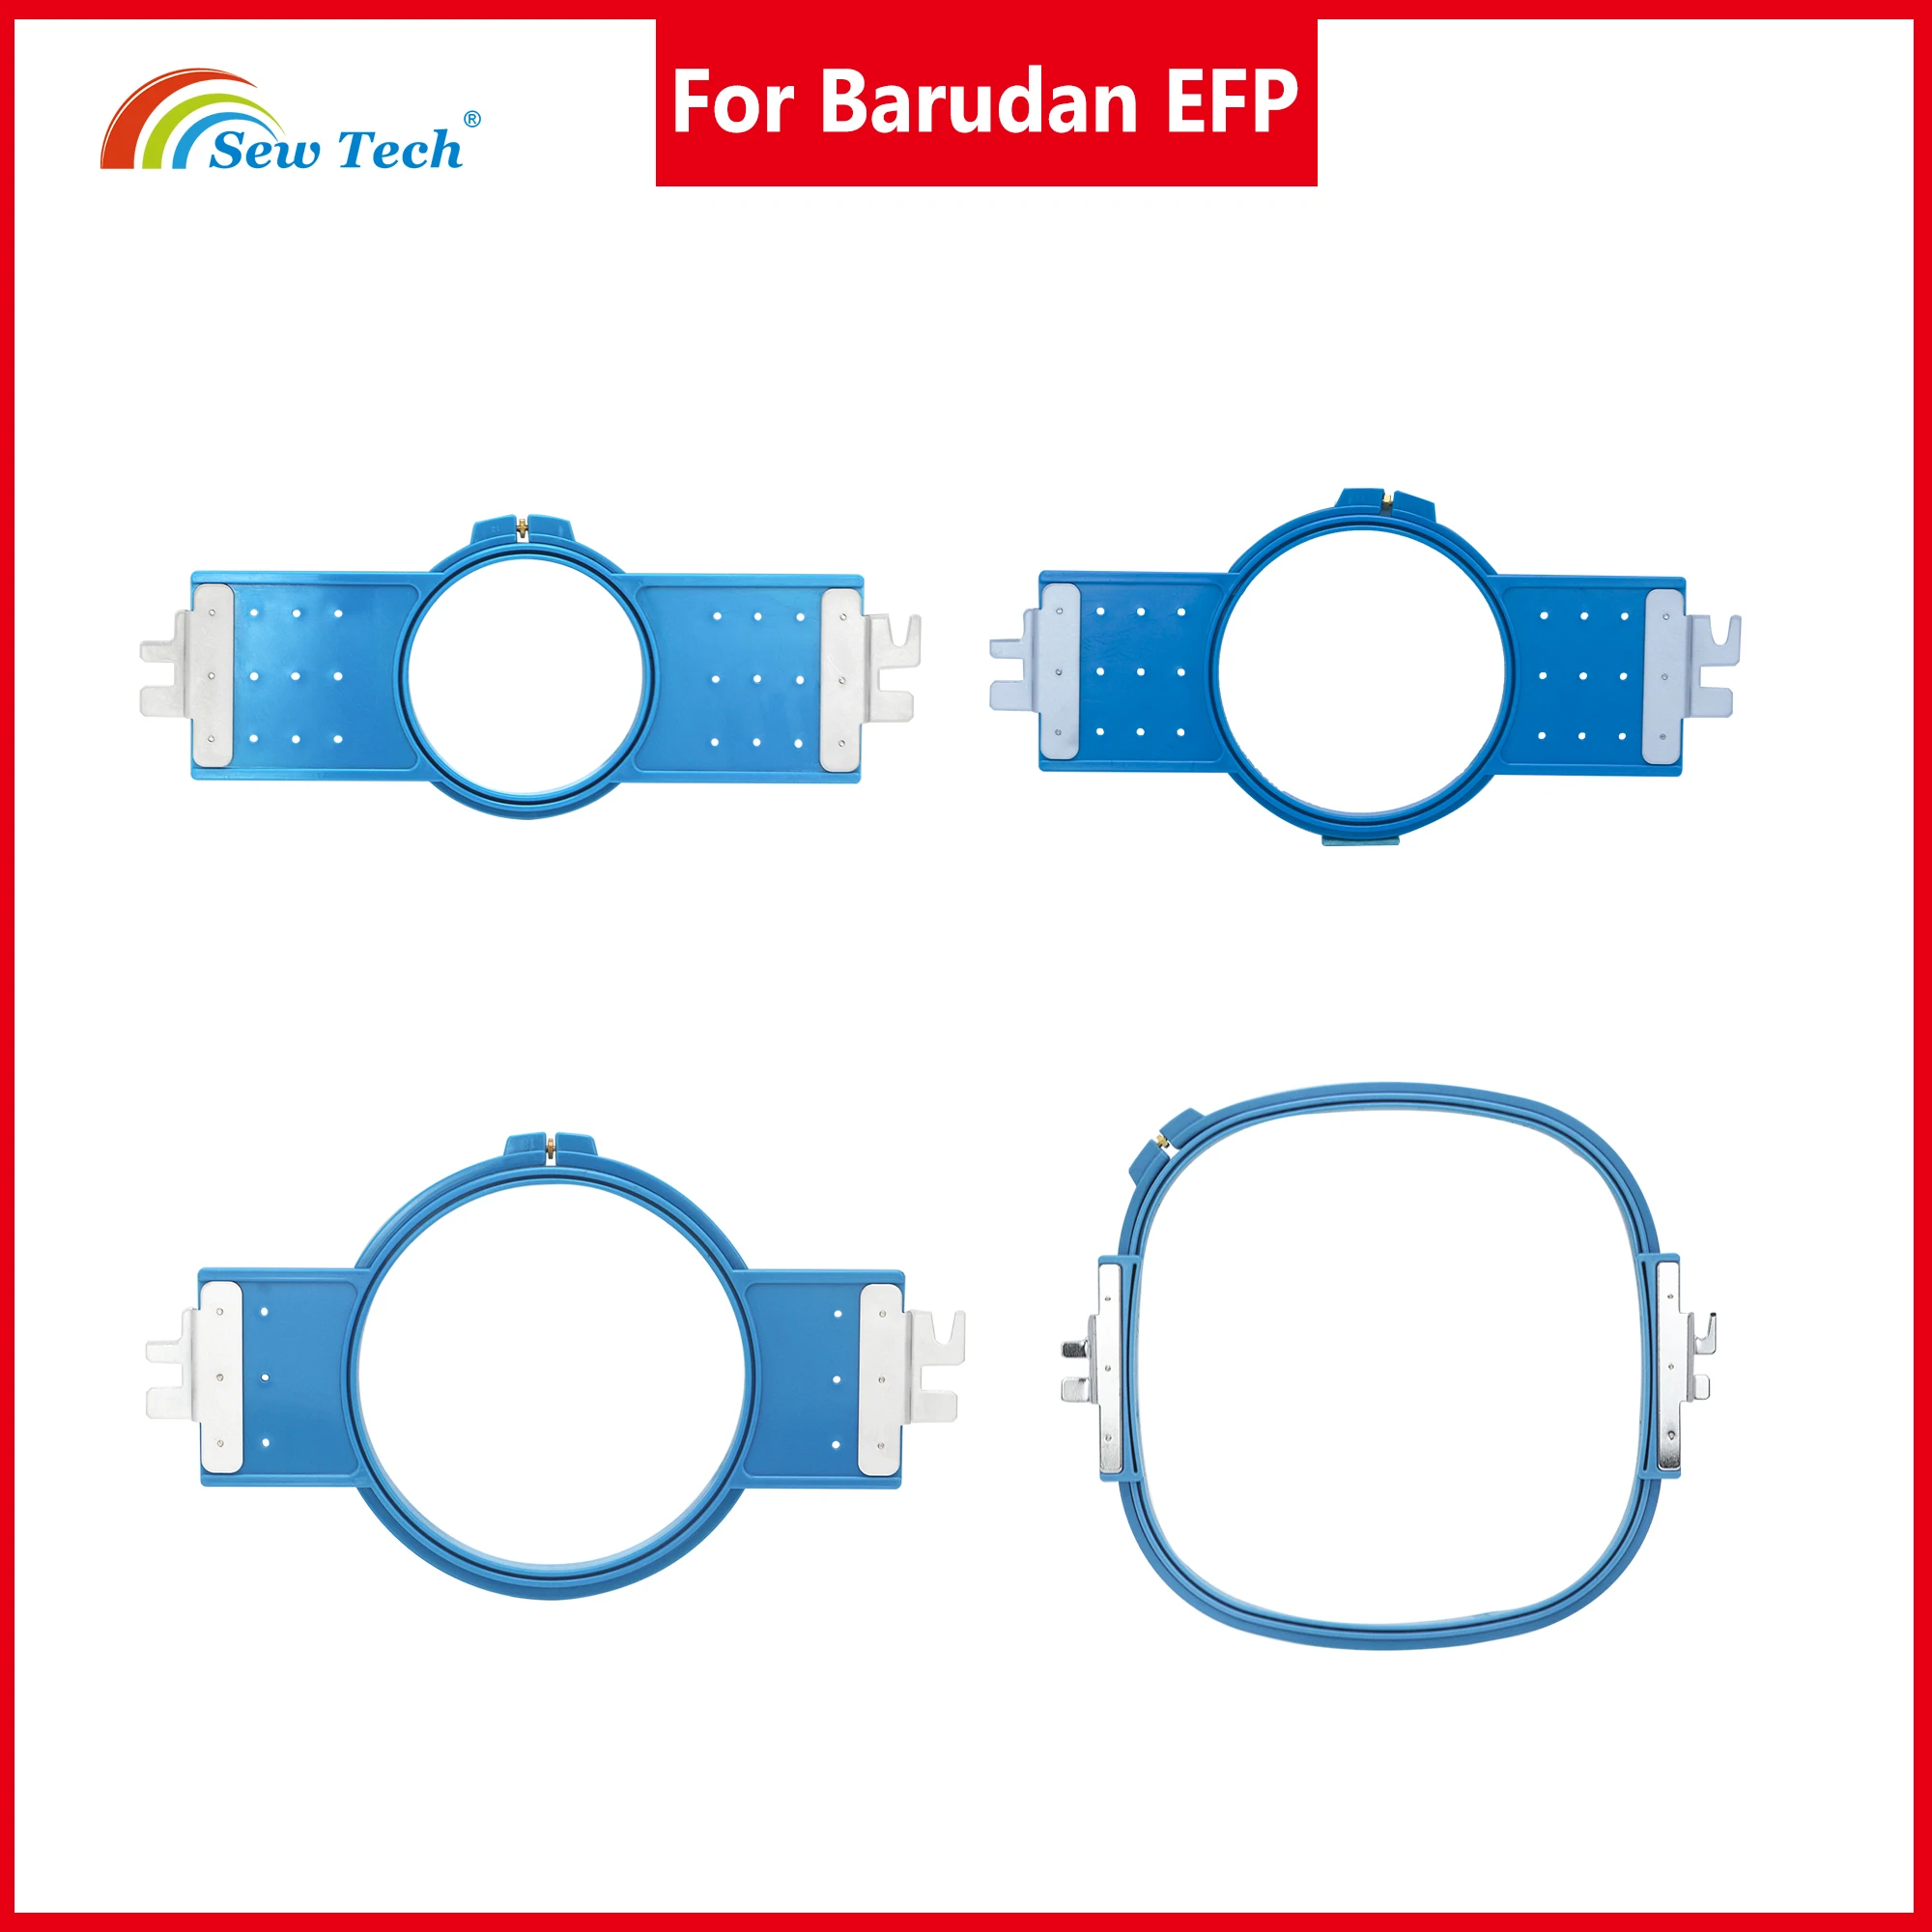 Sew Tech-aros de bordado para Barudan EFP, máquina de coser y bordar, anillos, Marcos tubulares